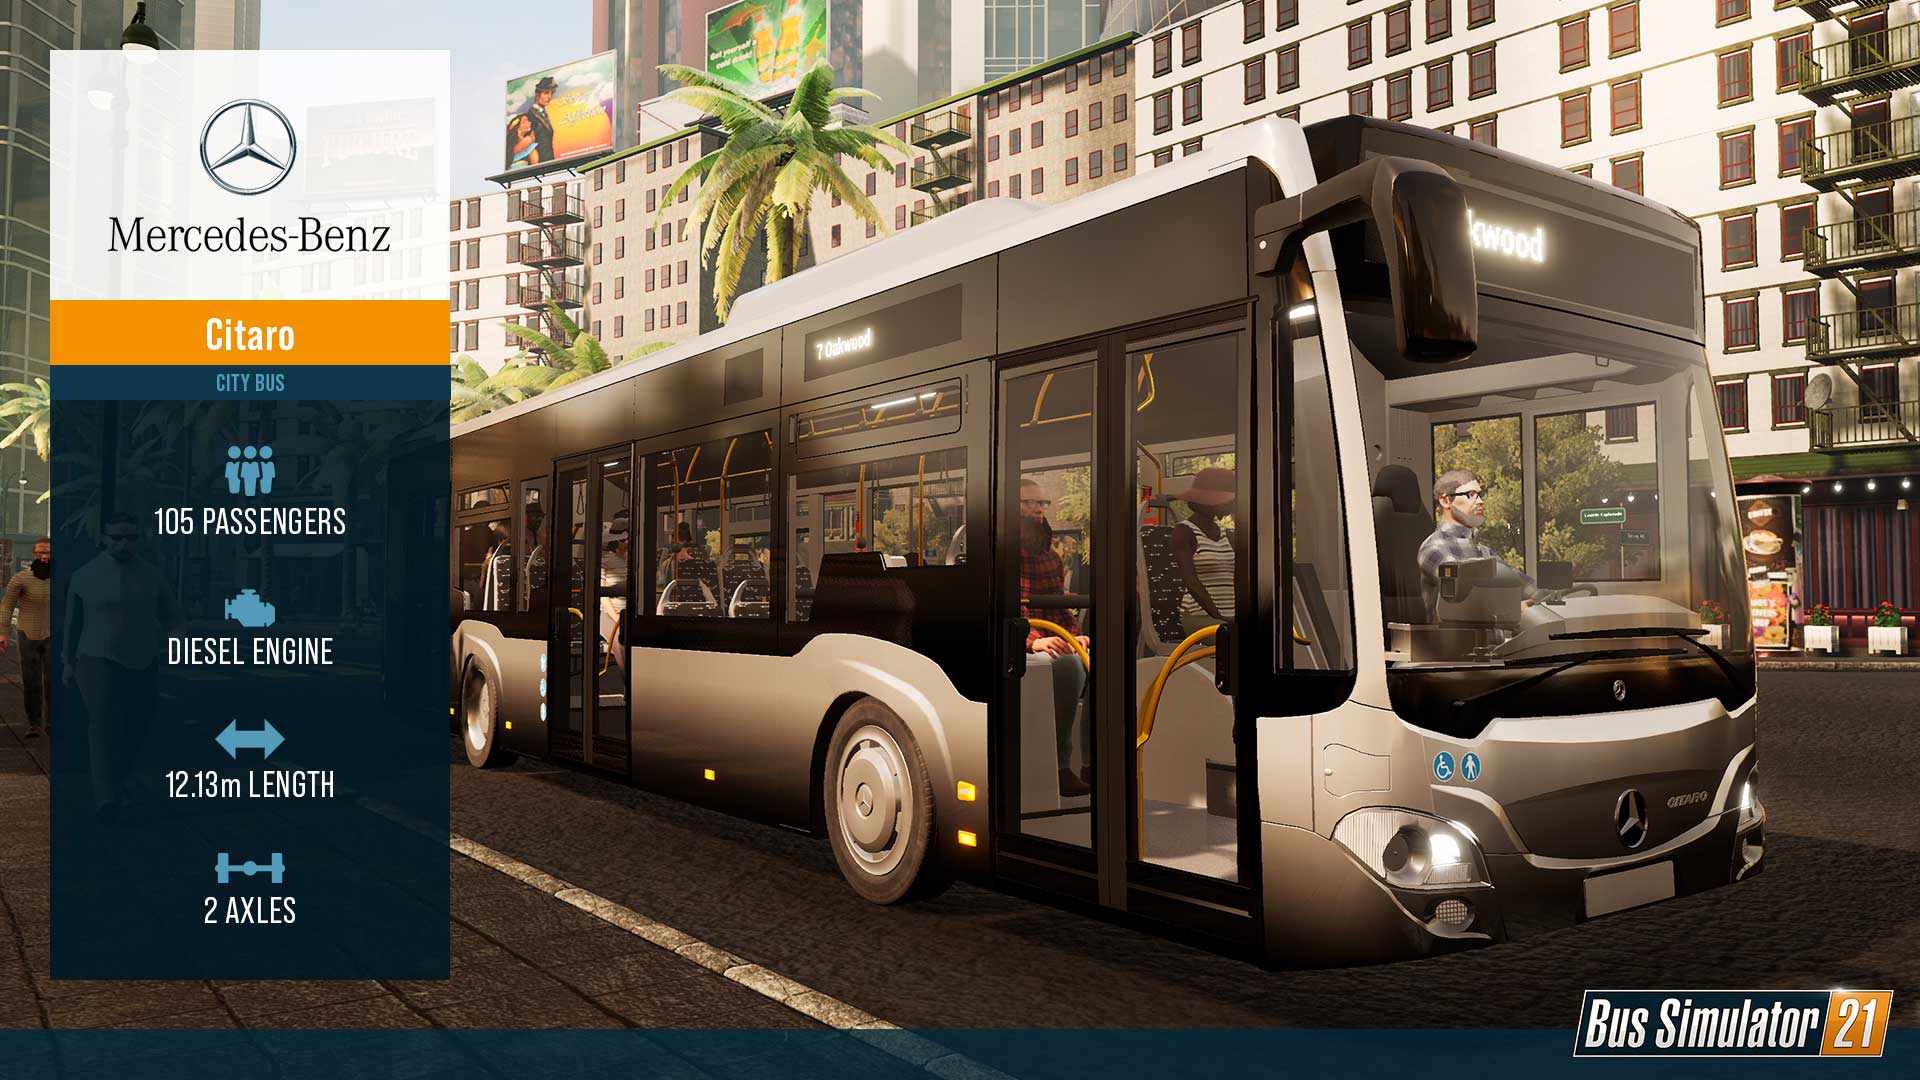 Tourist bus simulator activation key txt download free